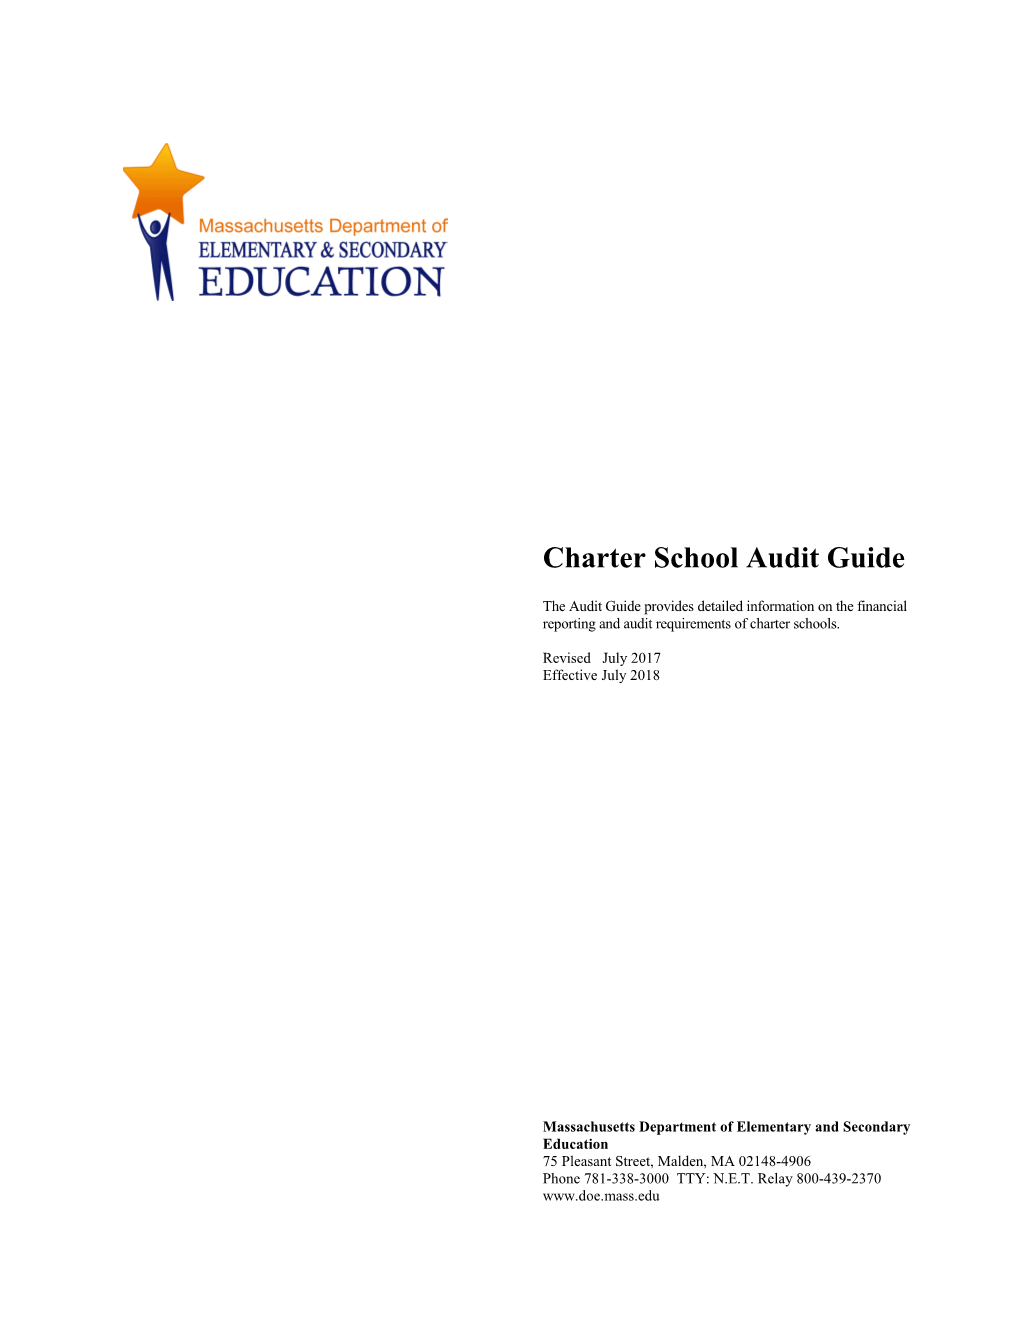 Massachusetts Charter School Audit Guide - Effective FY18